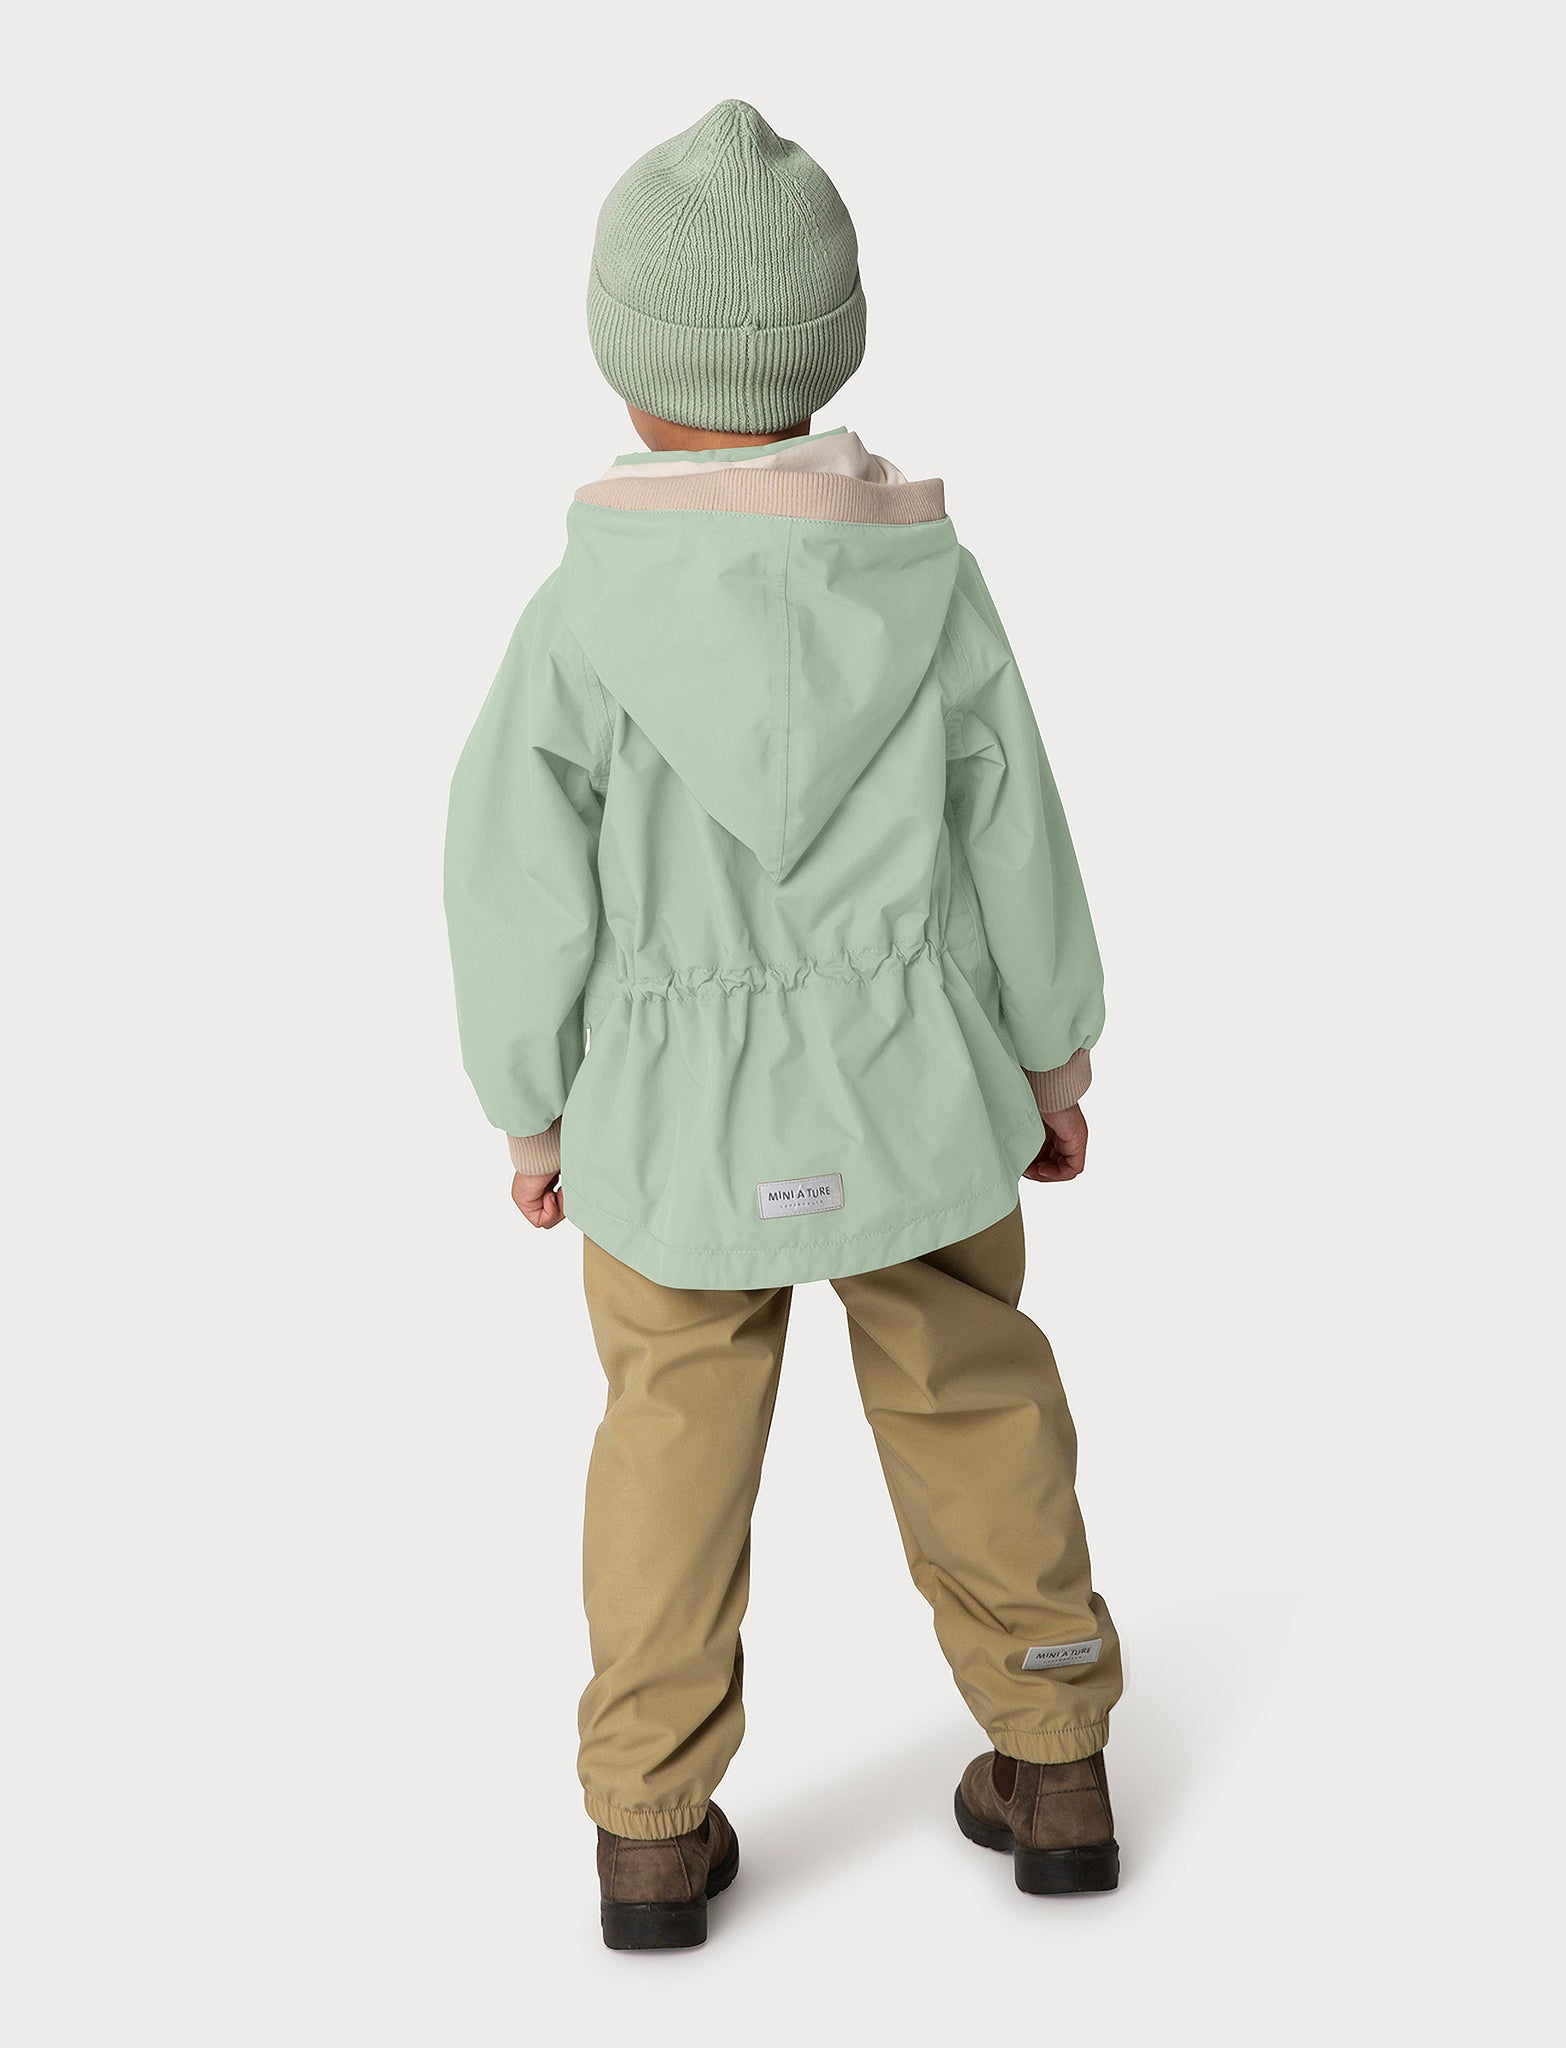 Mini a Ture - MATWAI fleece lined spring jacket. GRS dusty light green